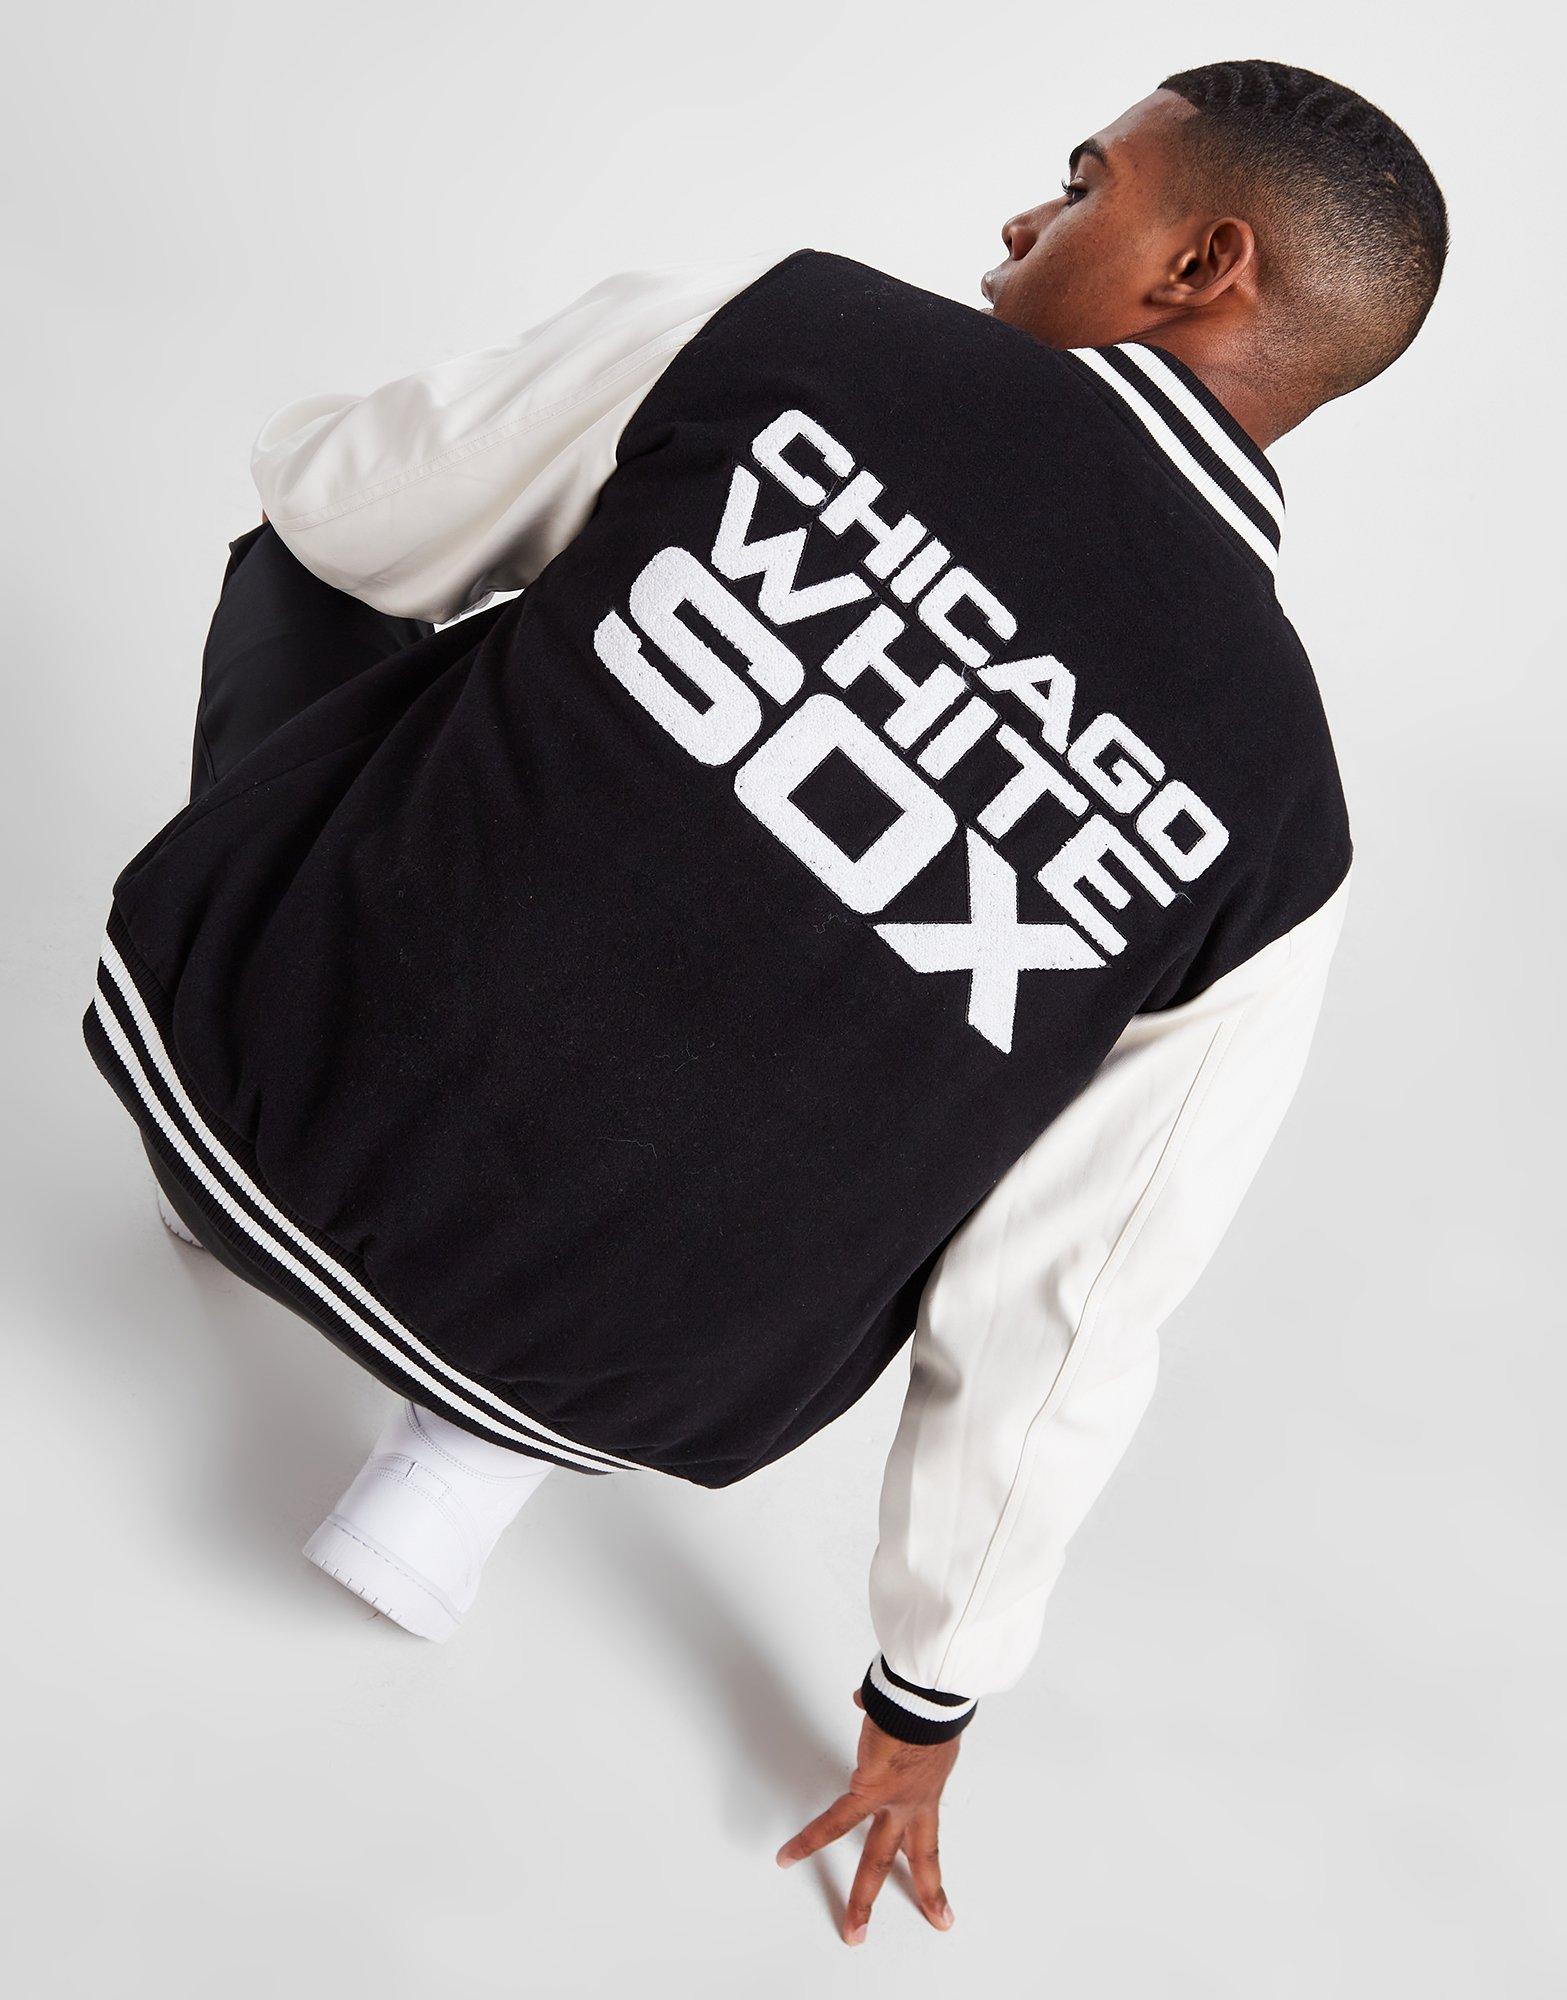 Lacoste Men's Branded Back Varsity Jacket - XL